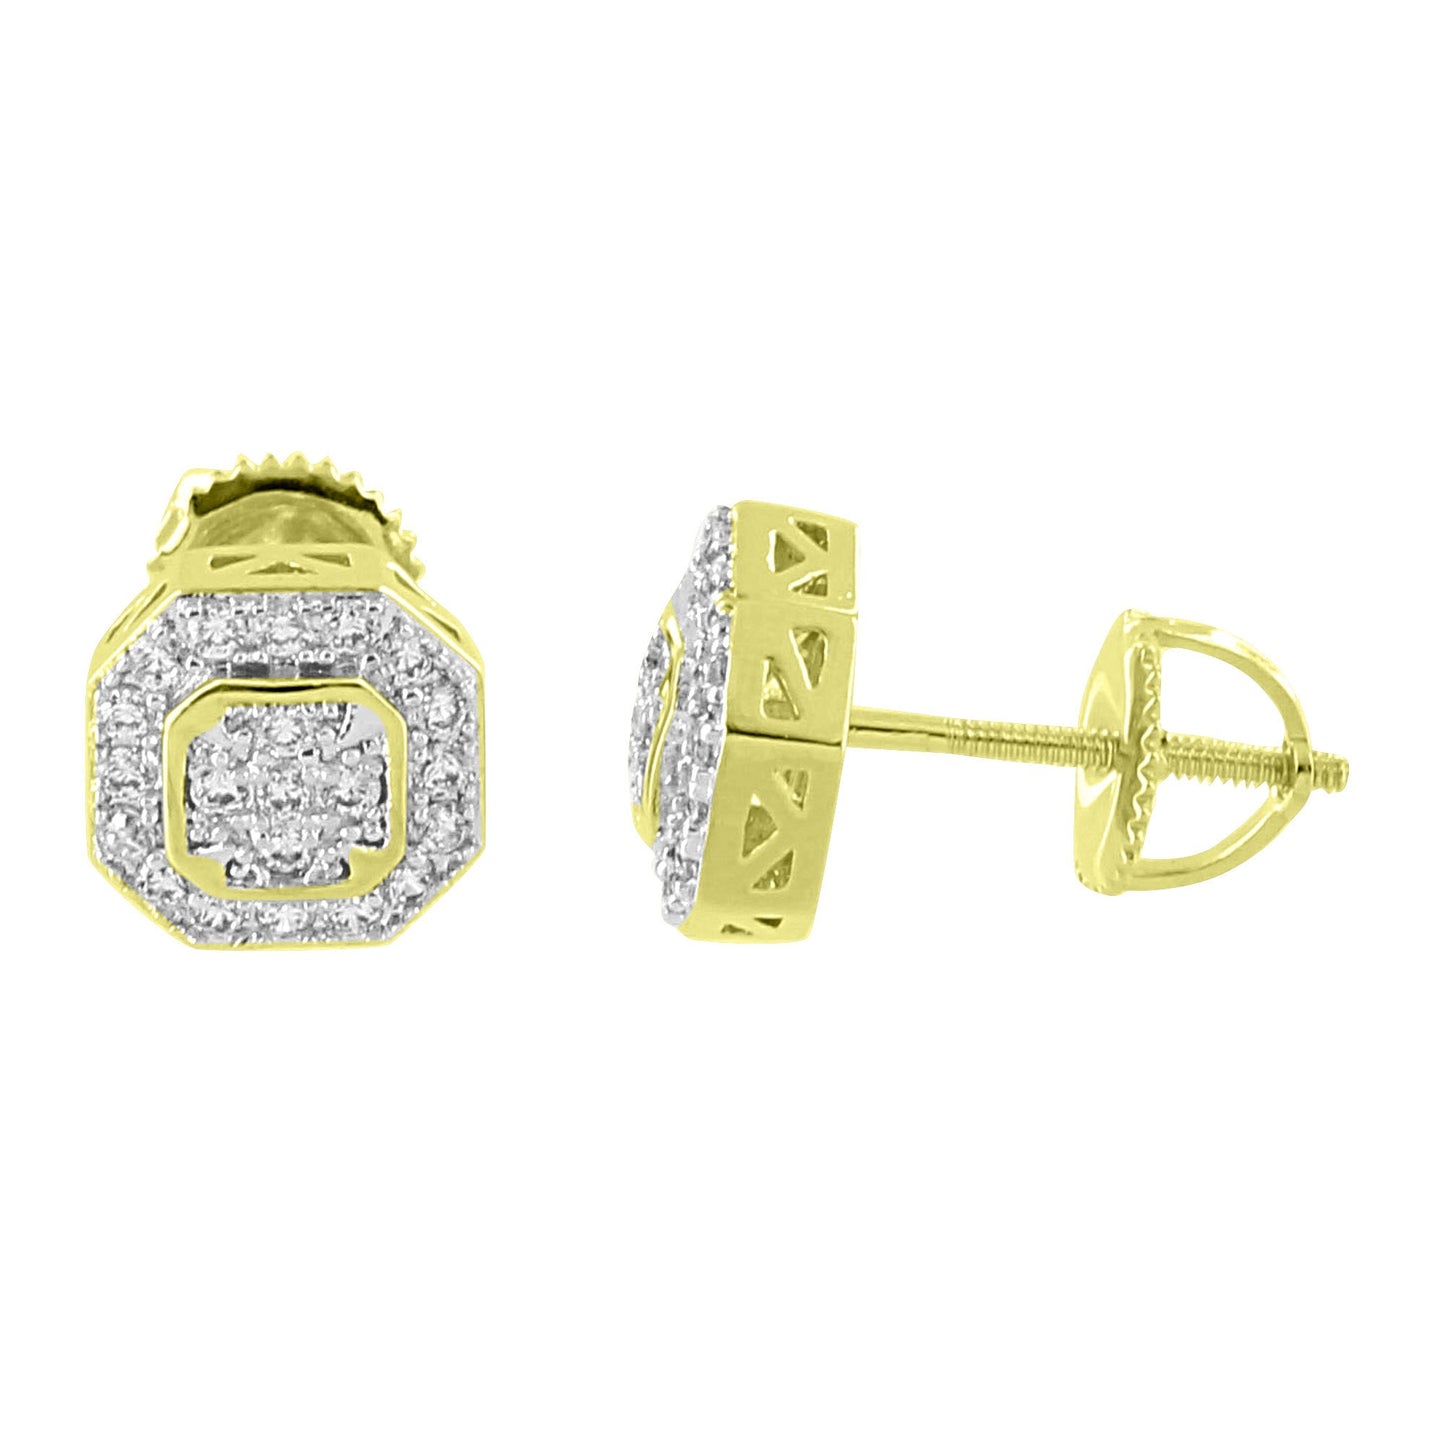 Octagon Designer Earrings  Simulated Diamonds 14K Gold Finish Screw Back 8mm Studs